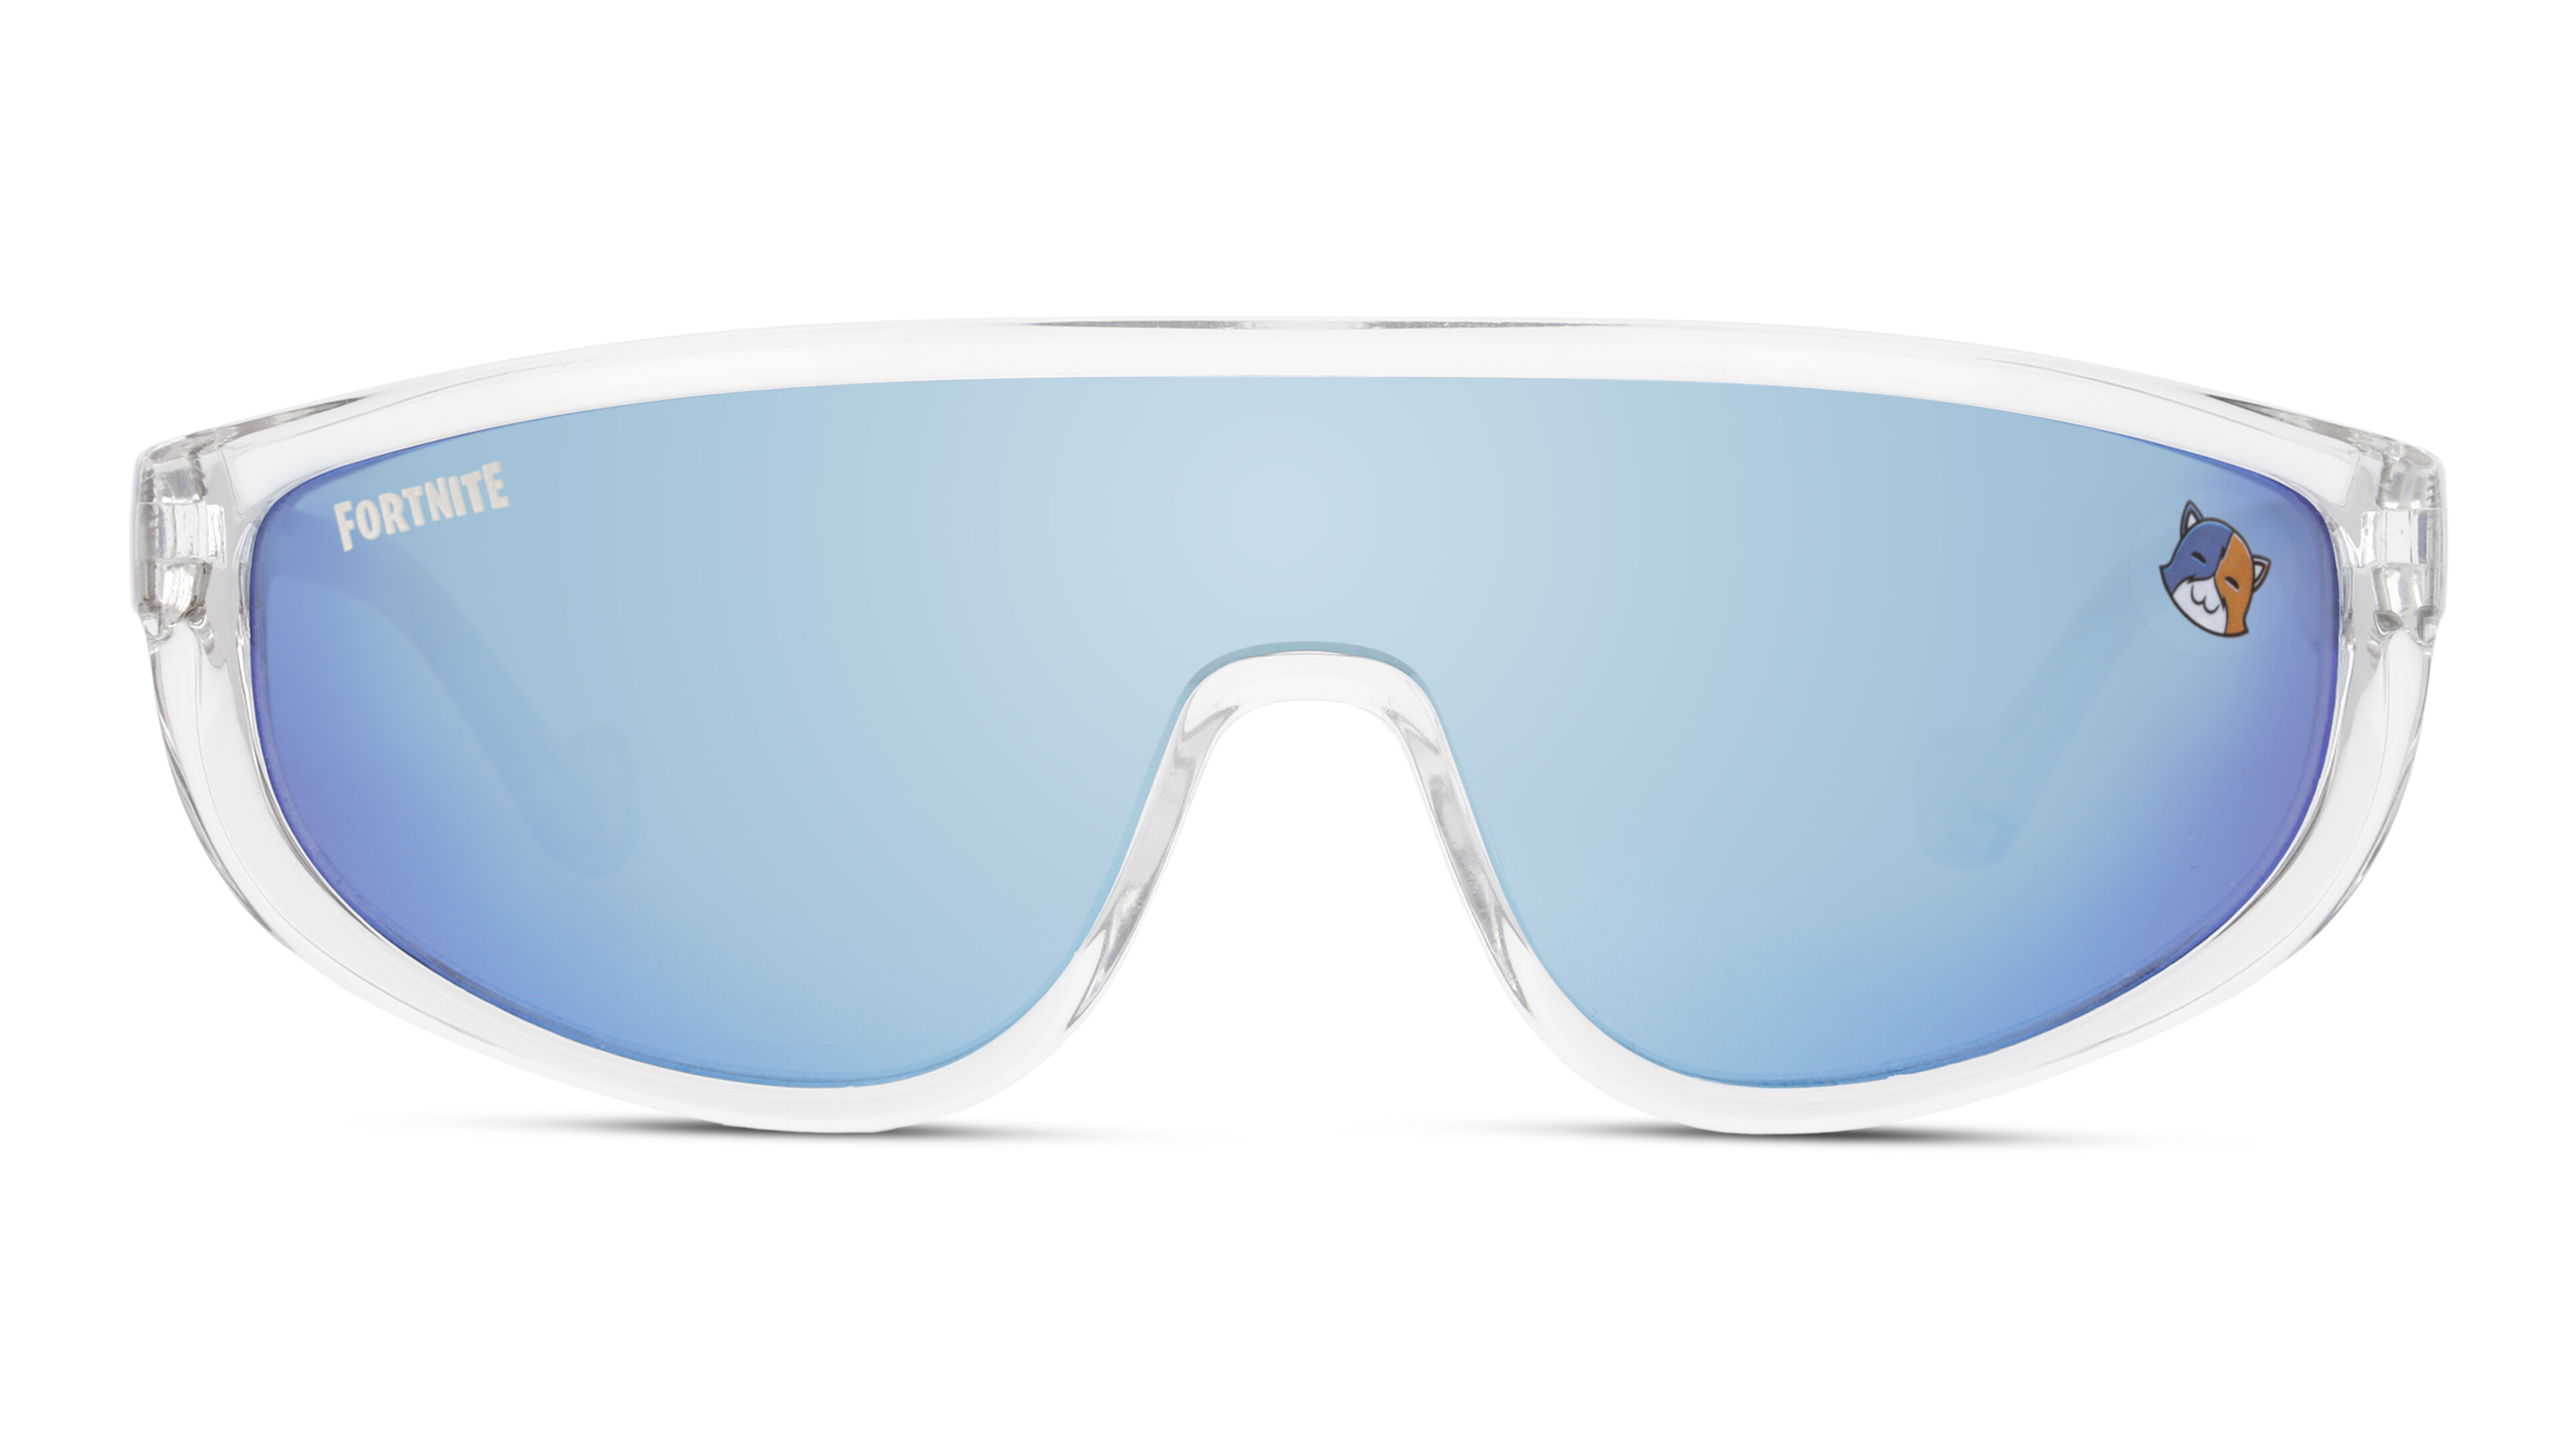 [products.image.front] UNOFFICIAL UNSU0135 TTNL Sonnenbrille